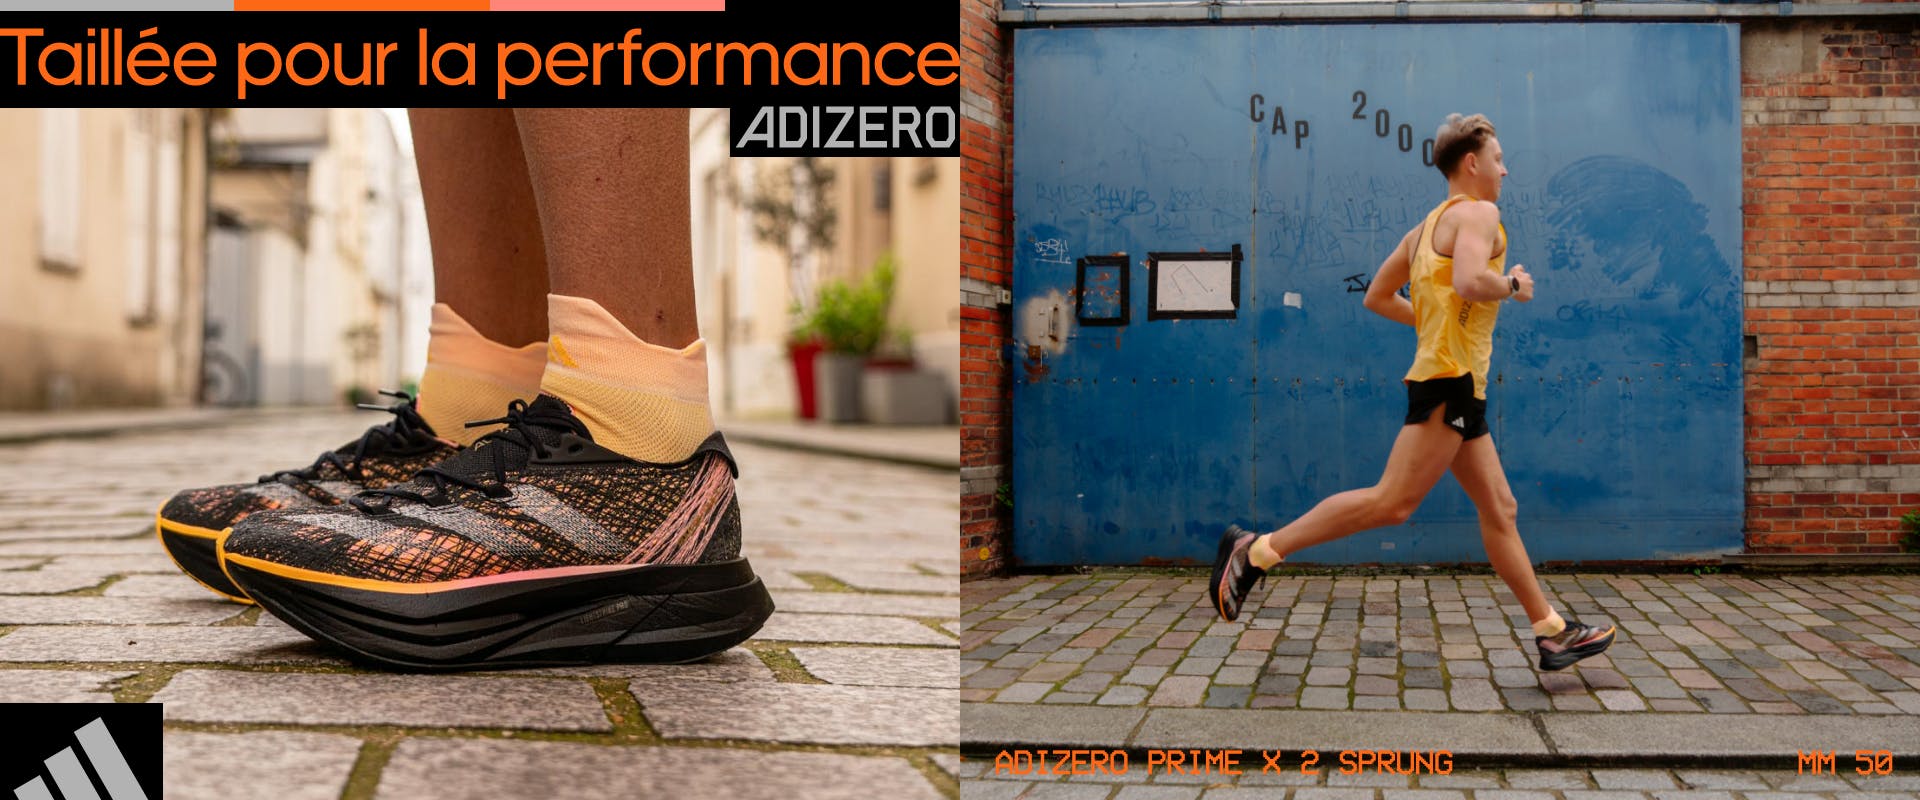 adidas Adizero Prime X 2 Strung